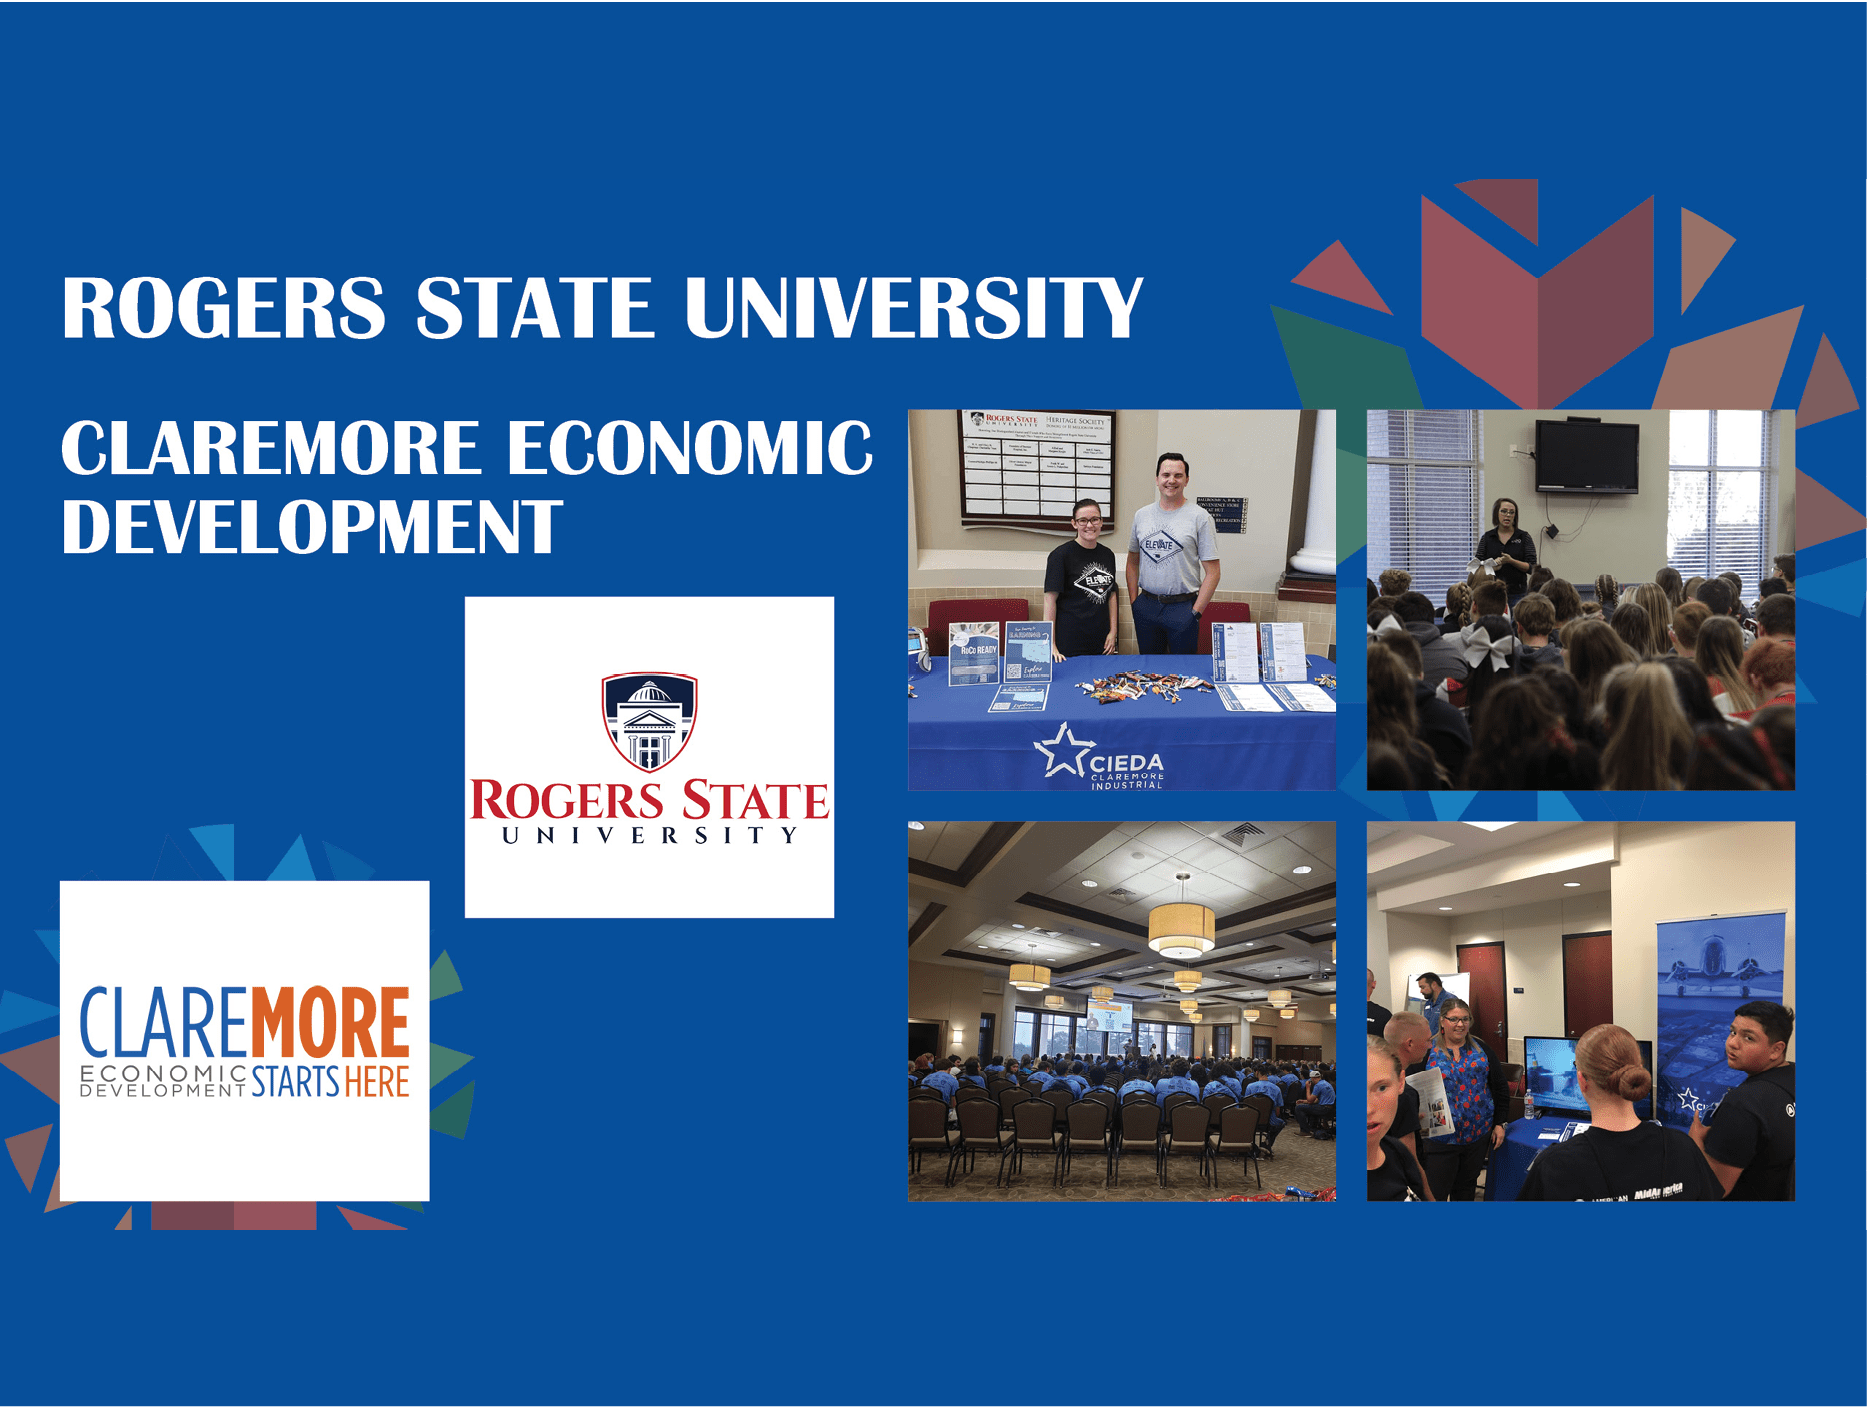 Rogers State University and Claremore Economic Development